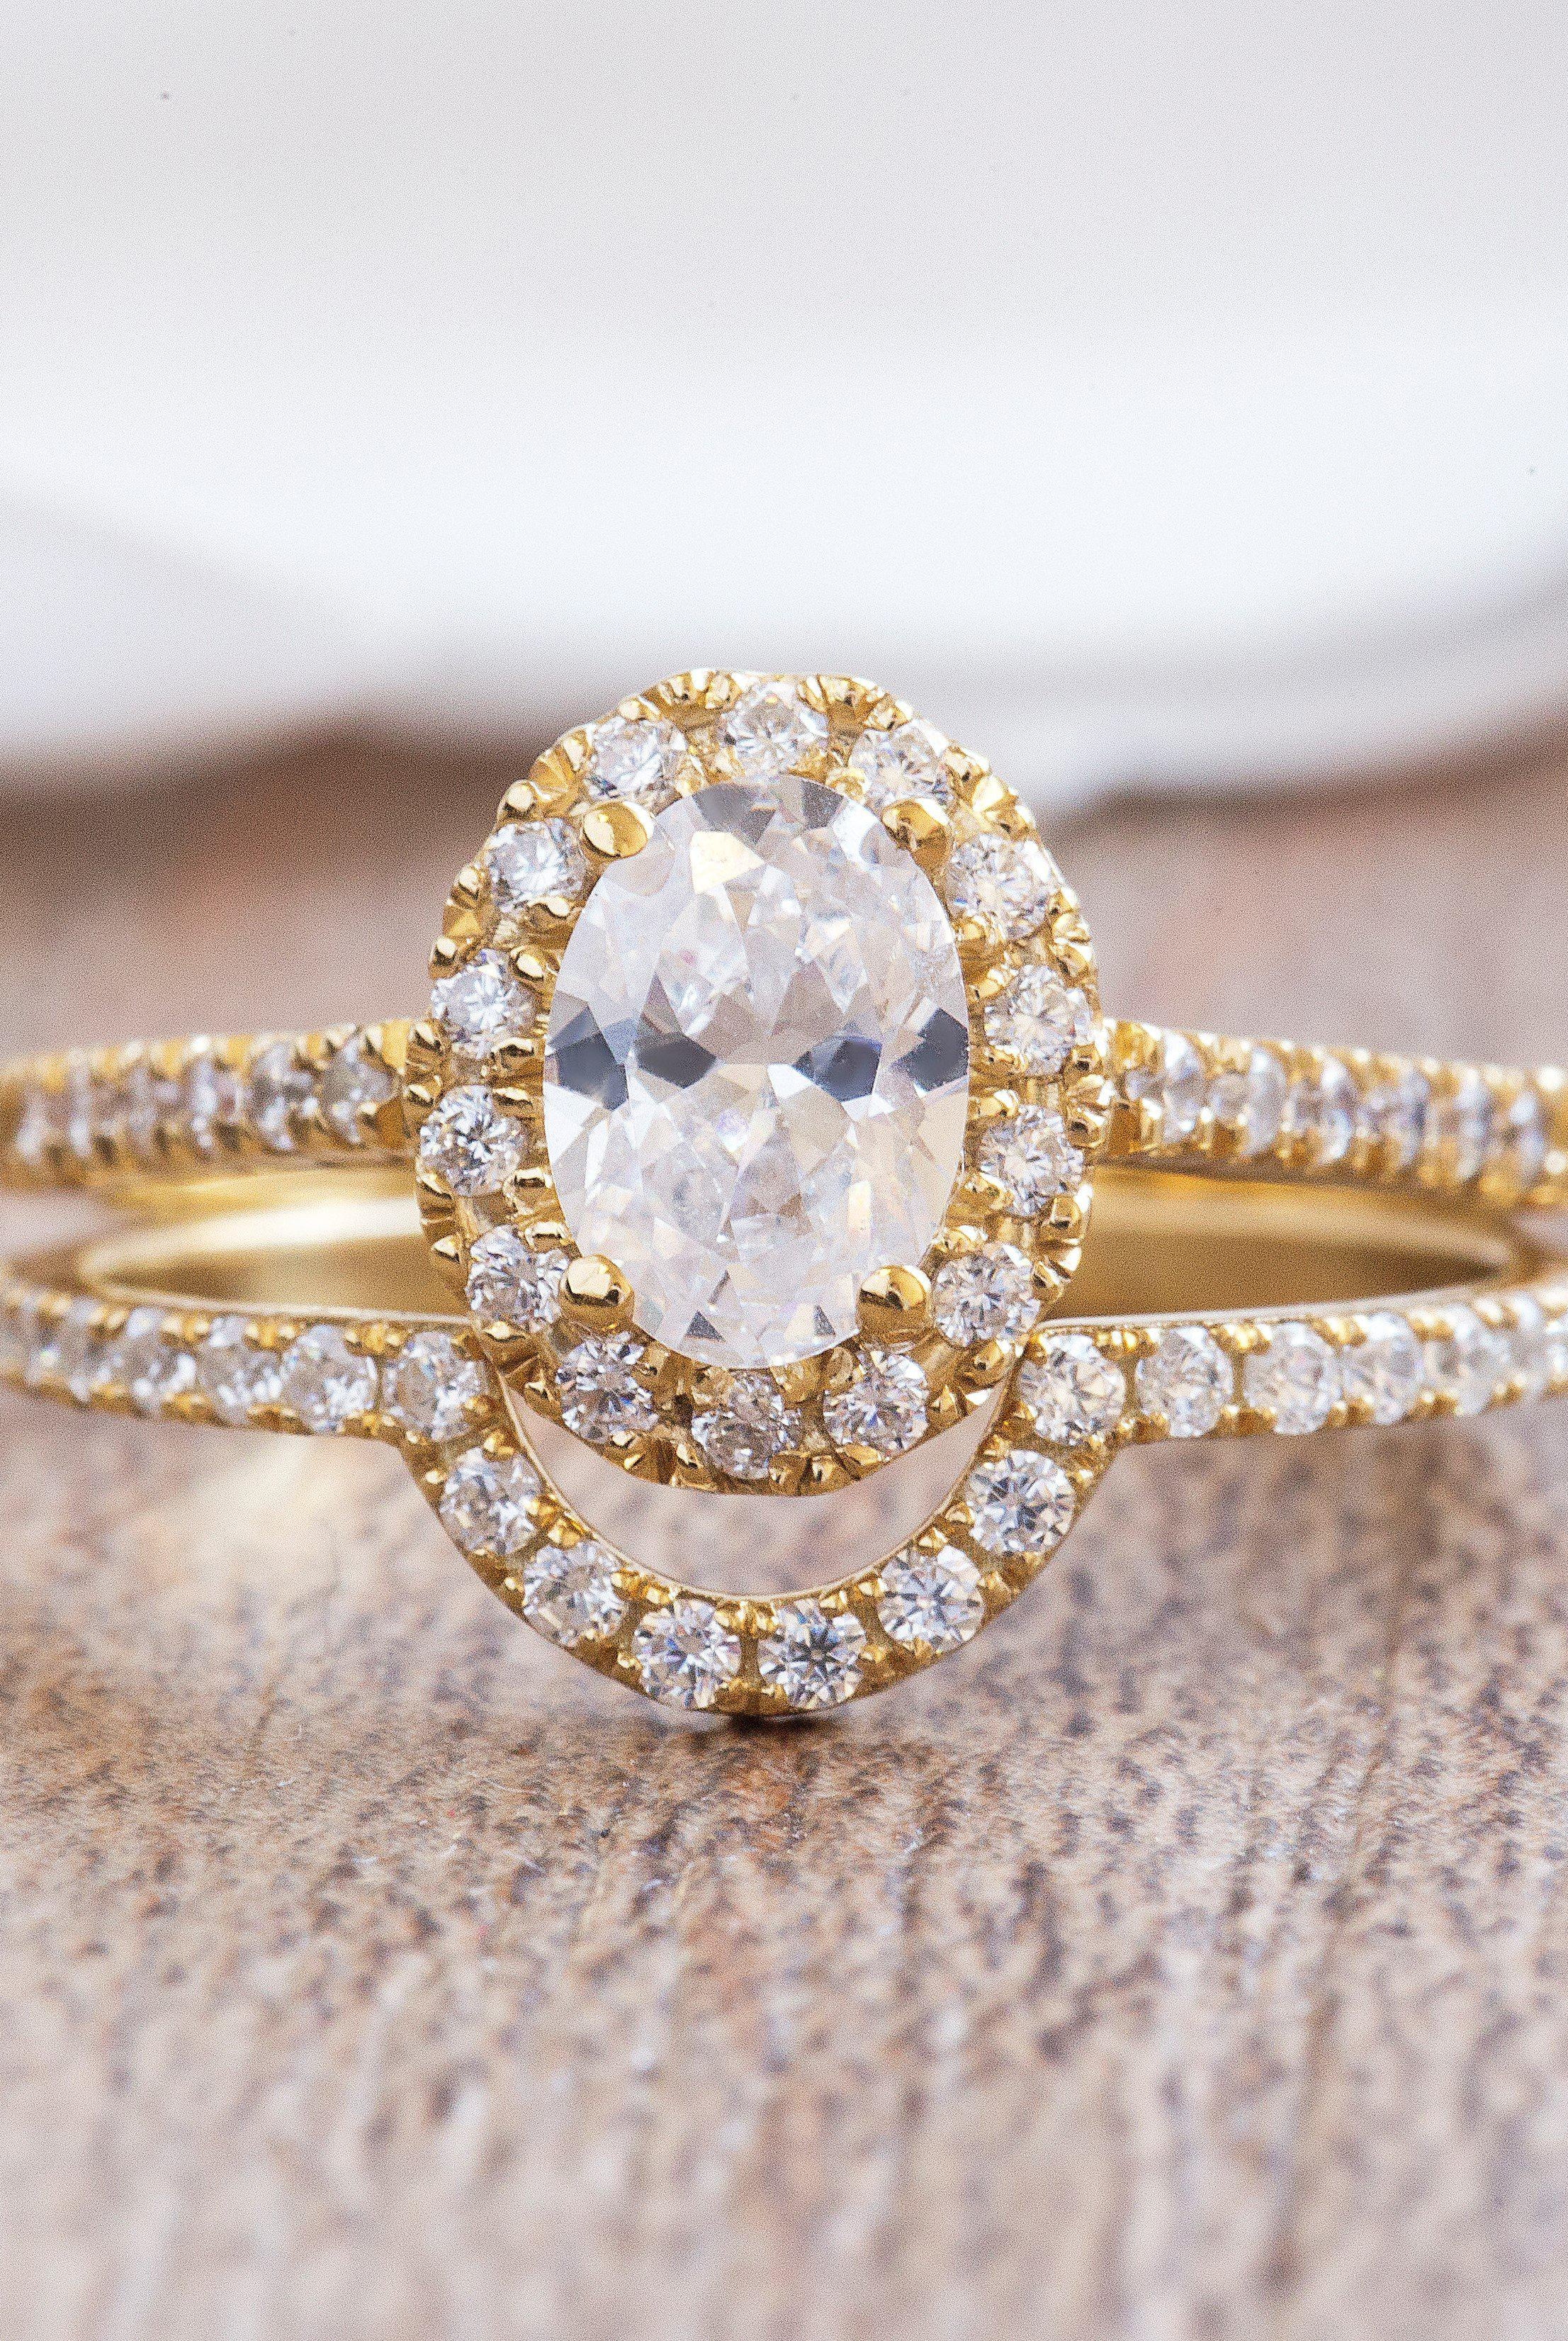 OVAL HALO DIAMOND RING - Danelian Jewelry